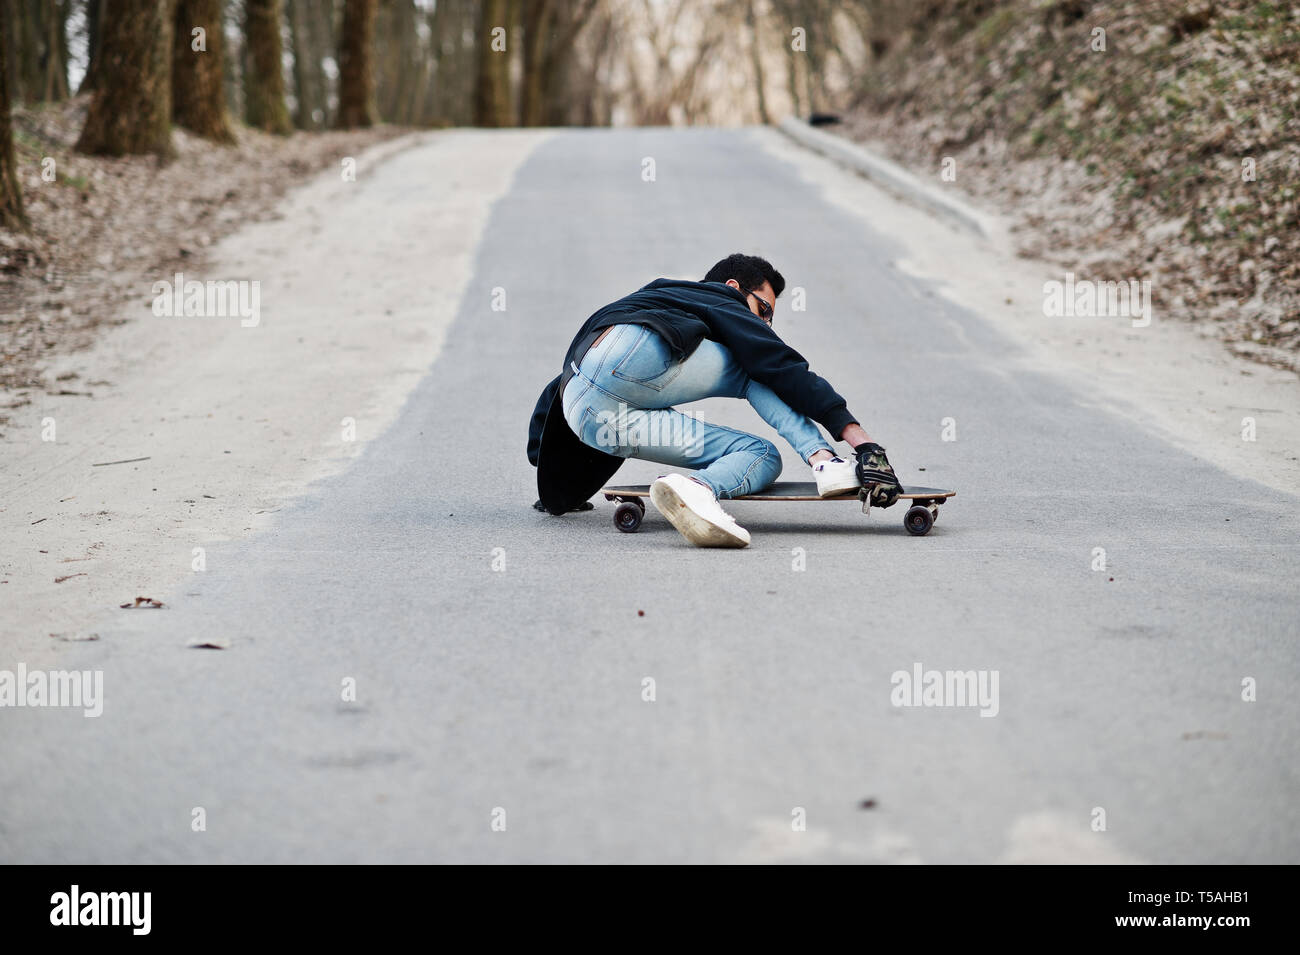 Fail falling from a skateboard. Street style arab man in eyeglasses with longboard  longboarding down the road Stock Photo - Alamy